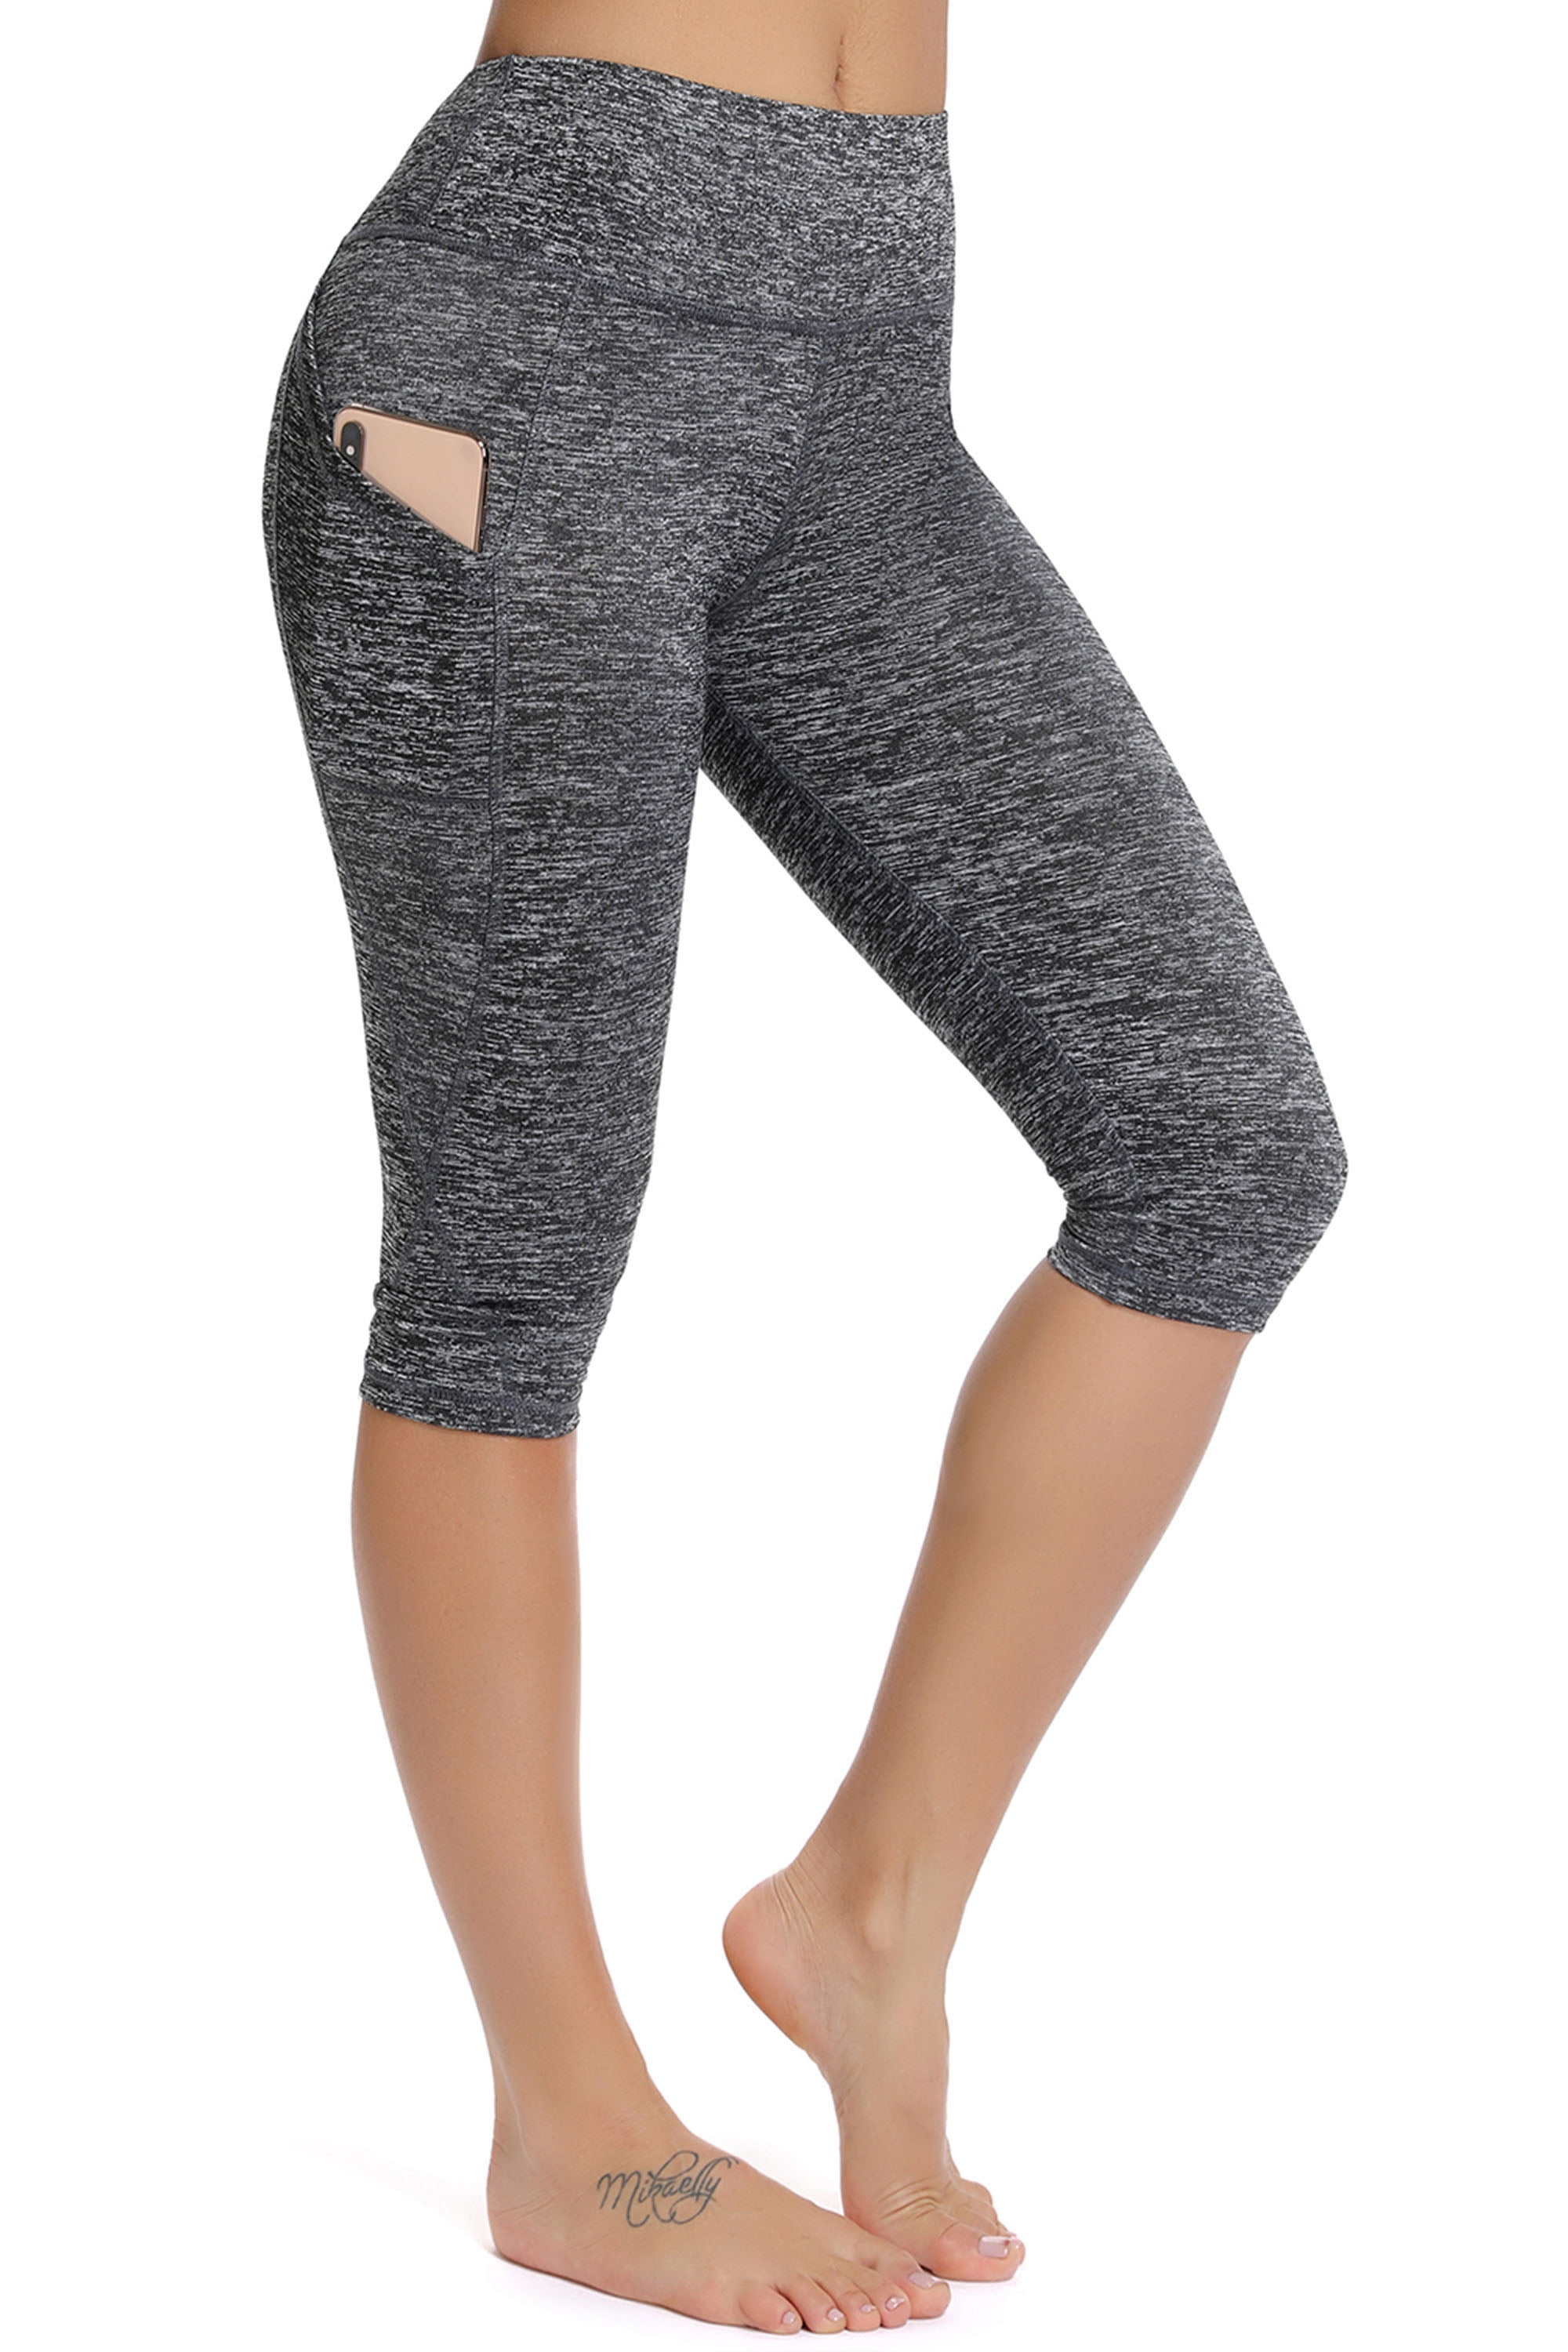 ODODOS Womens Bootleg Yoga Capris with Pockets High Waisted Bootcut Yoga Capris Tummy Control Work Capri Pants for Women